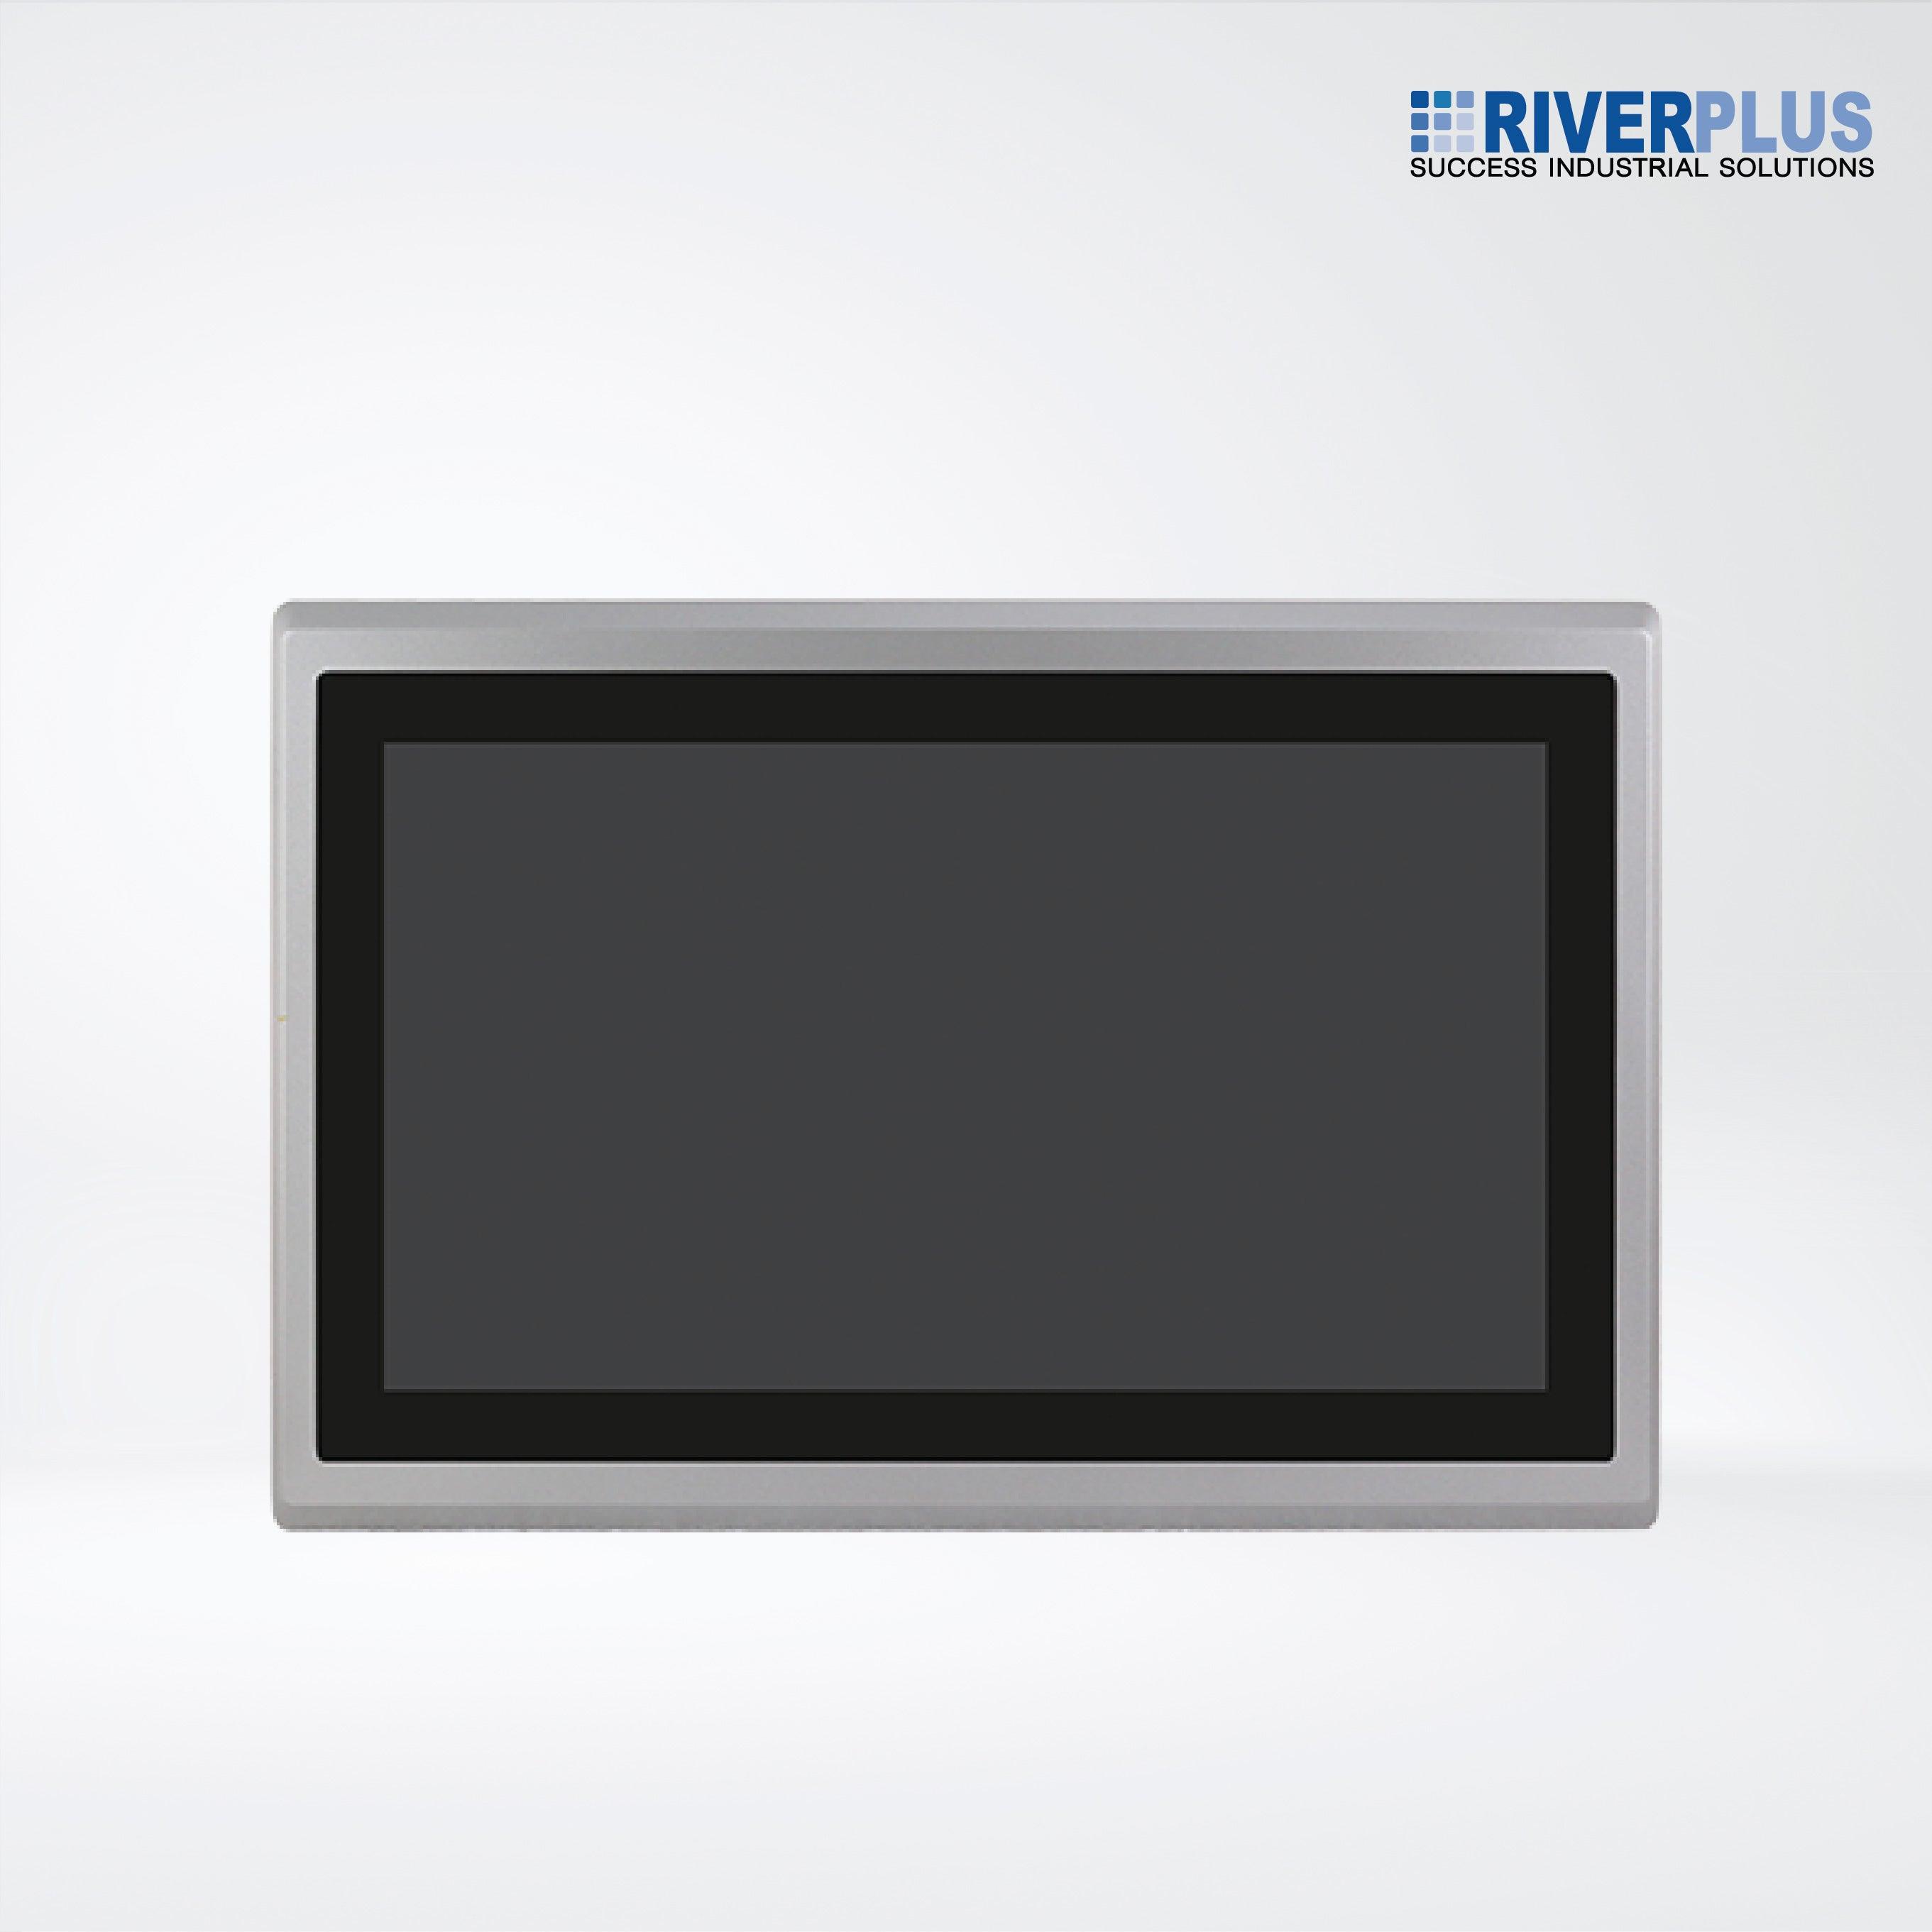 ViPAC-816RH 15.6” Intel Celeron N2930 Fanless Expandable Panel PC - Riverplus